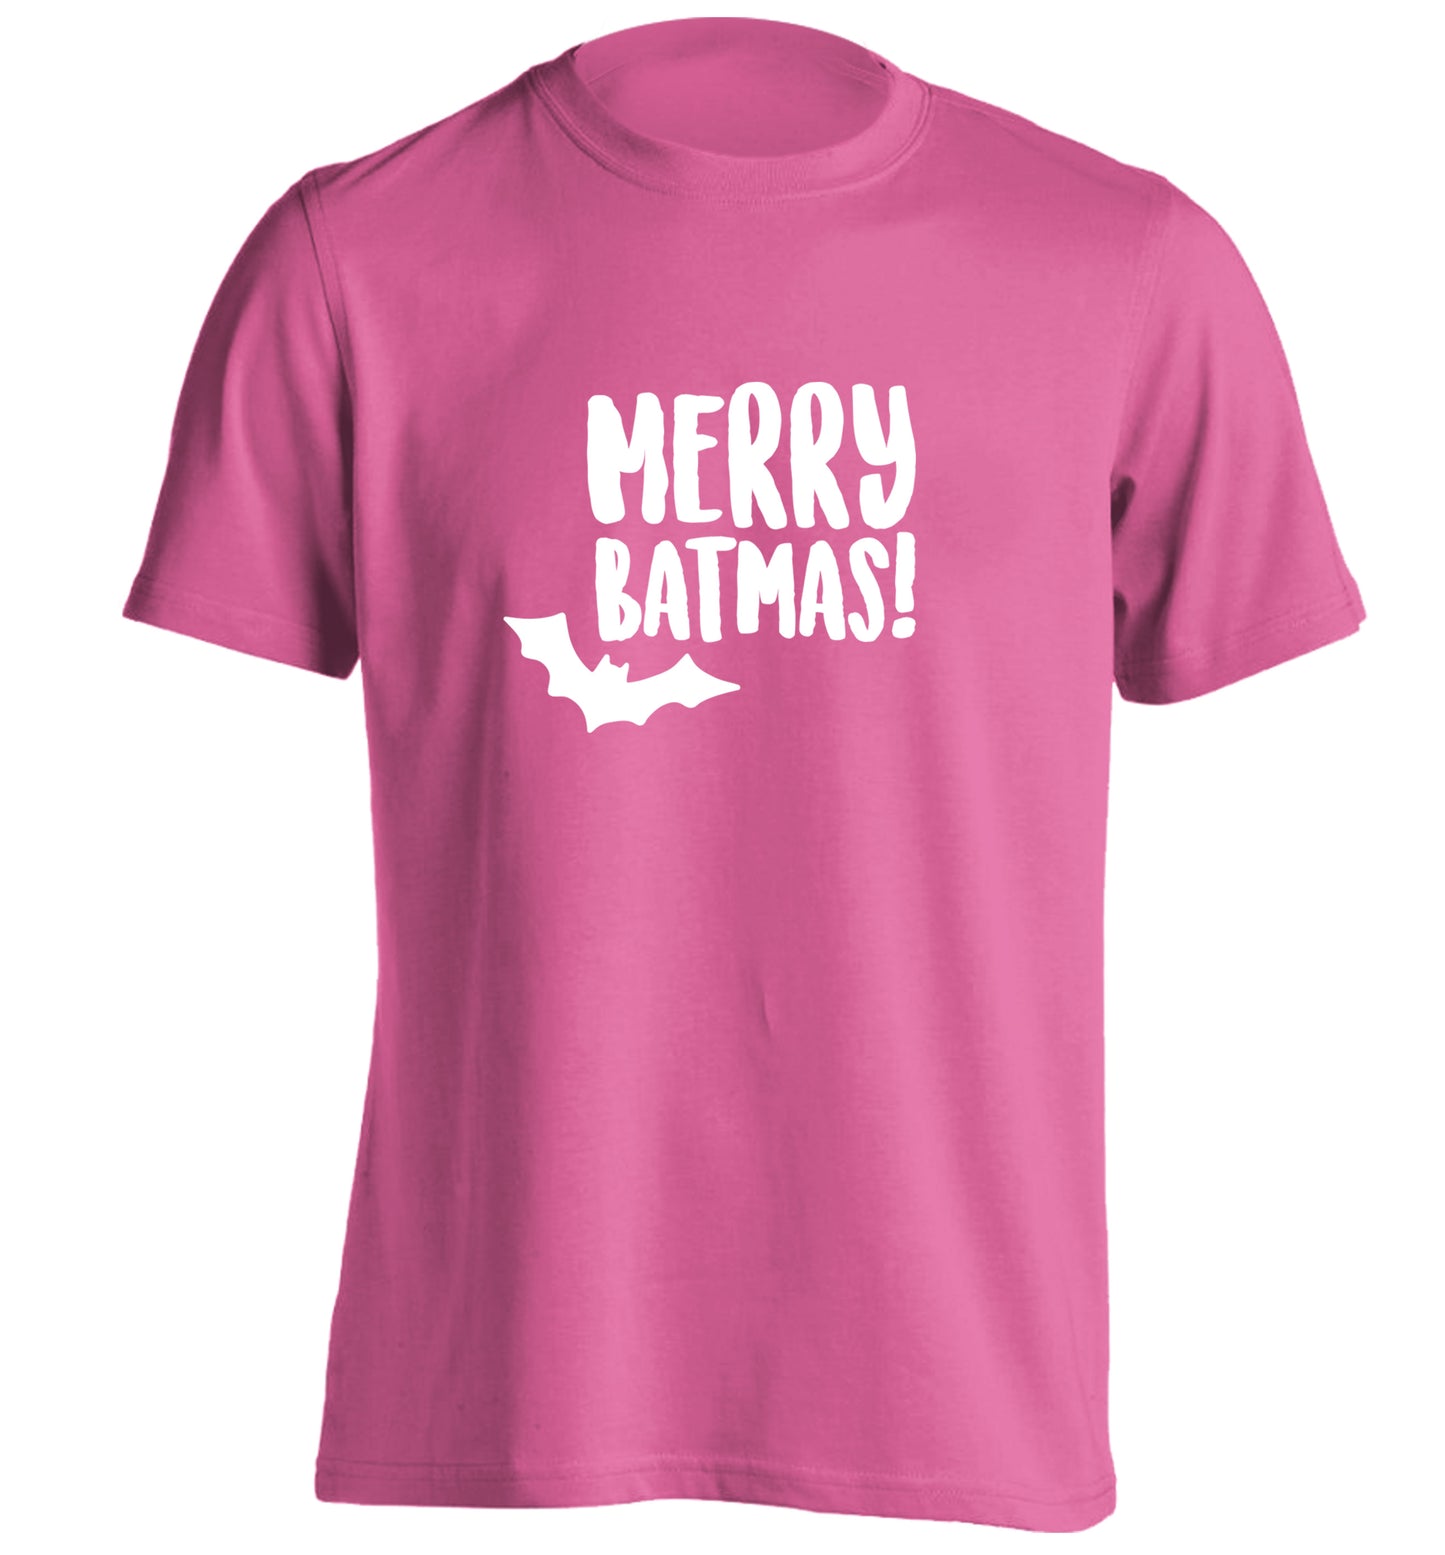 Merry Batmas adults unisex pink Tshirt 2XL